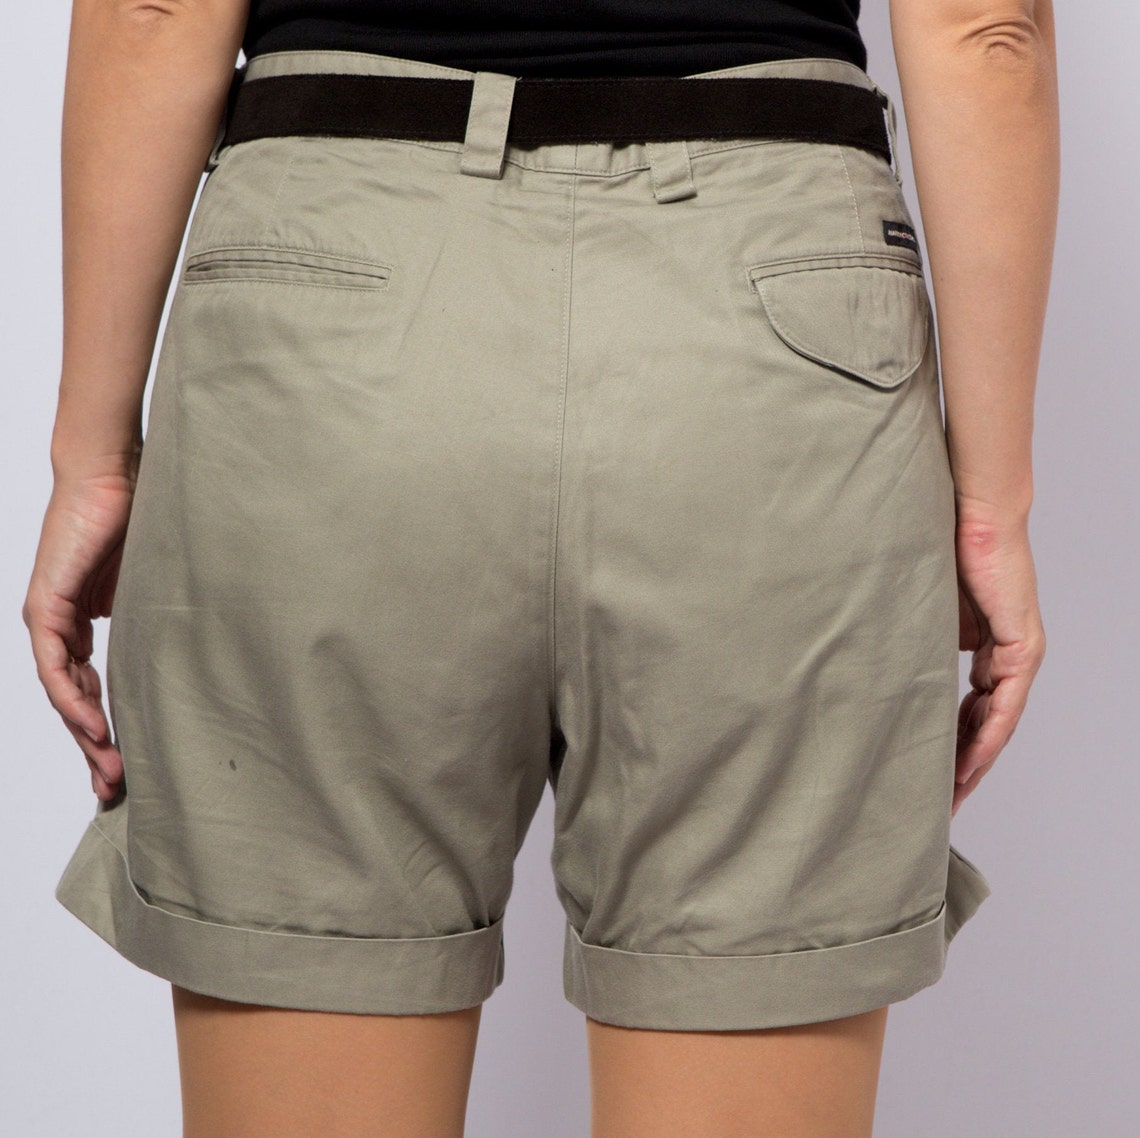 safari shorts womens